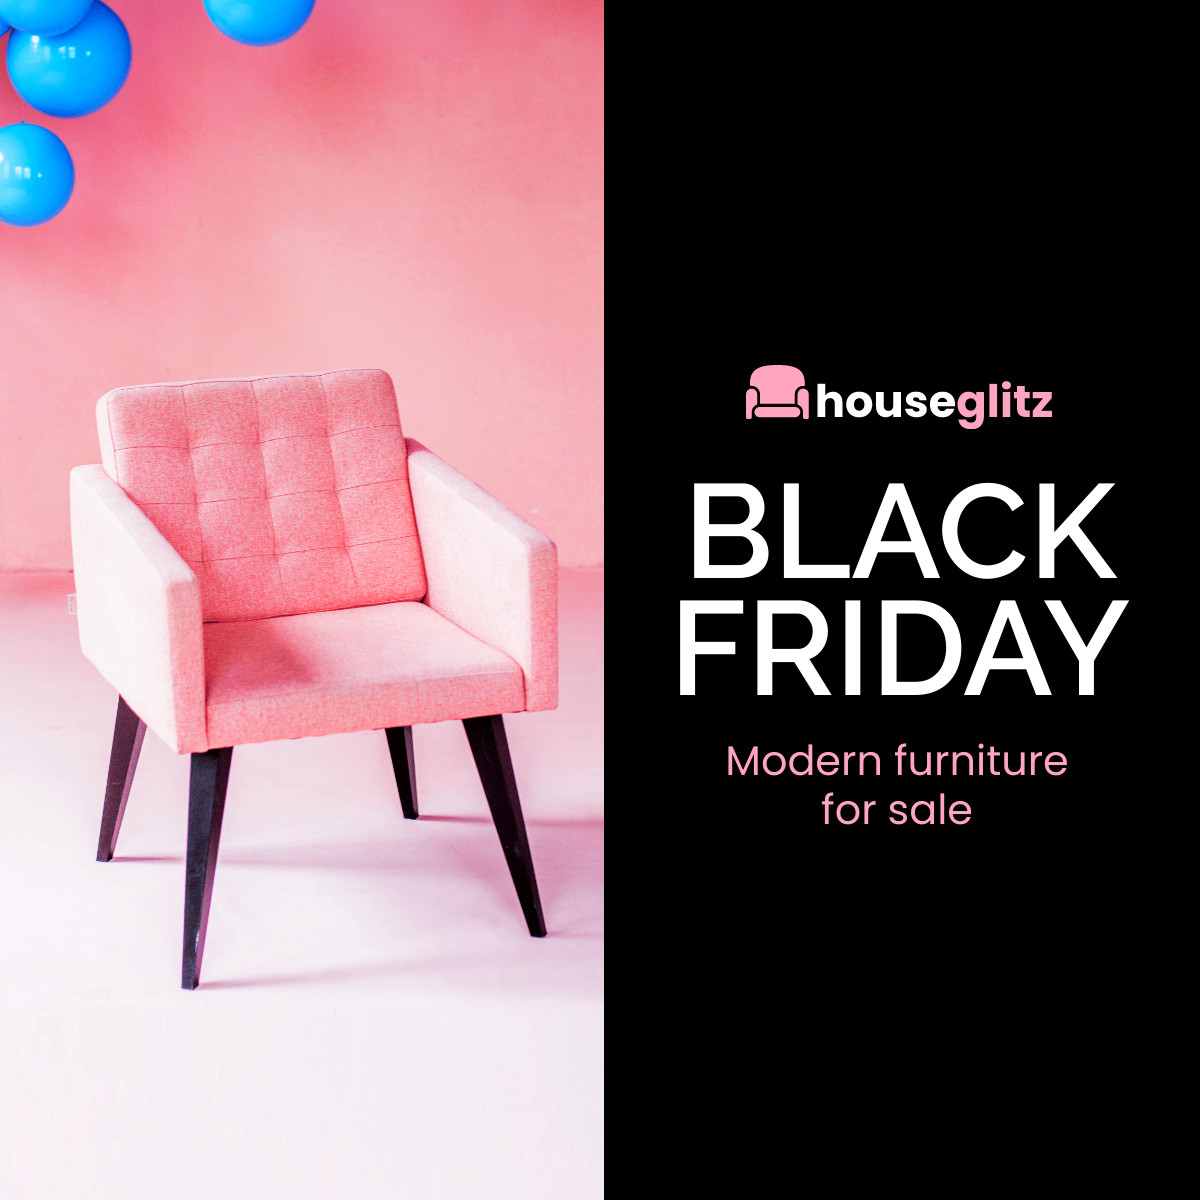 Black Friday Modern Pink Furniture Sale Inline Rectangle 300x250